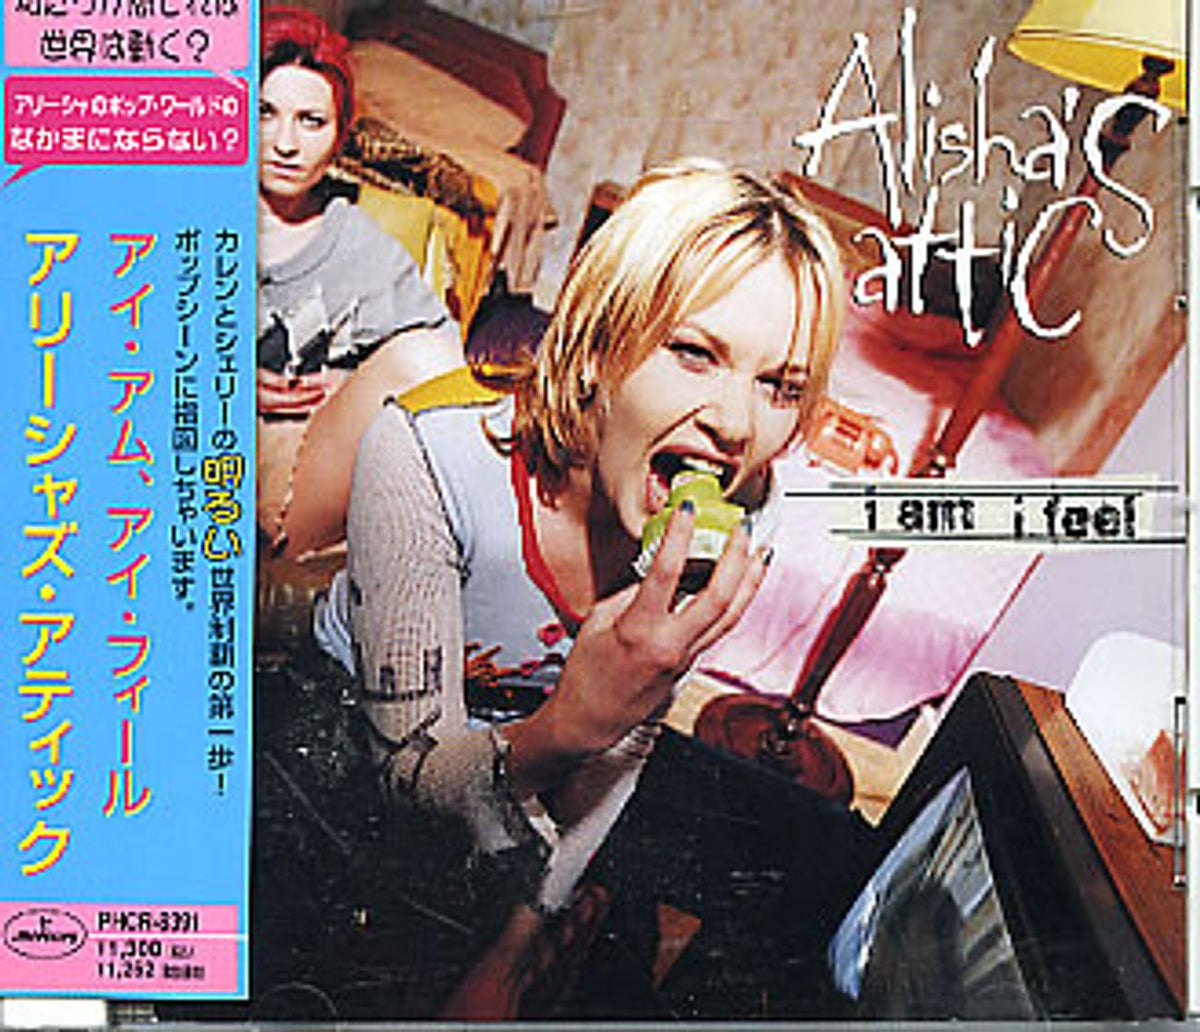 Alisha's Attic I Am I Feel Japanese Promo CD single — RareVinyl.com